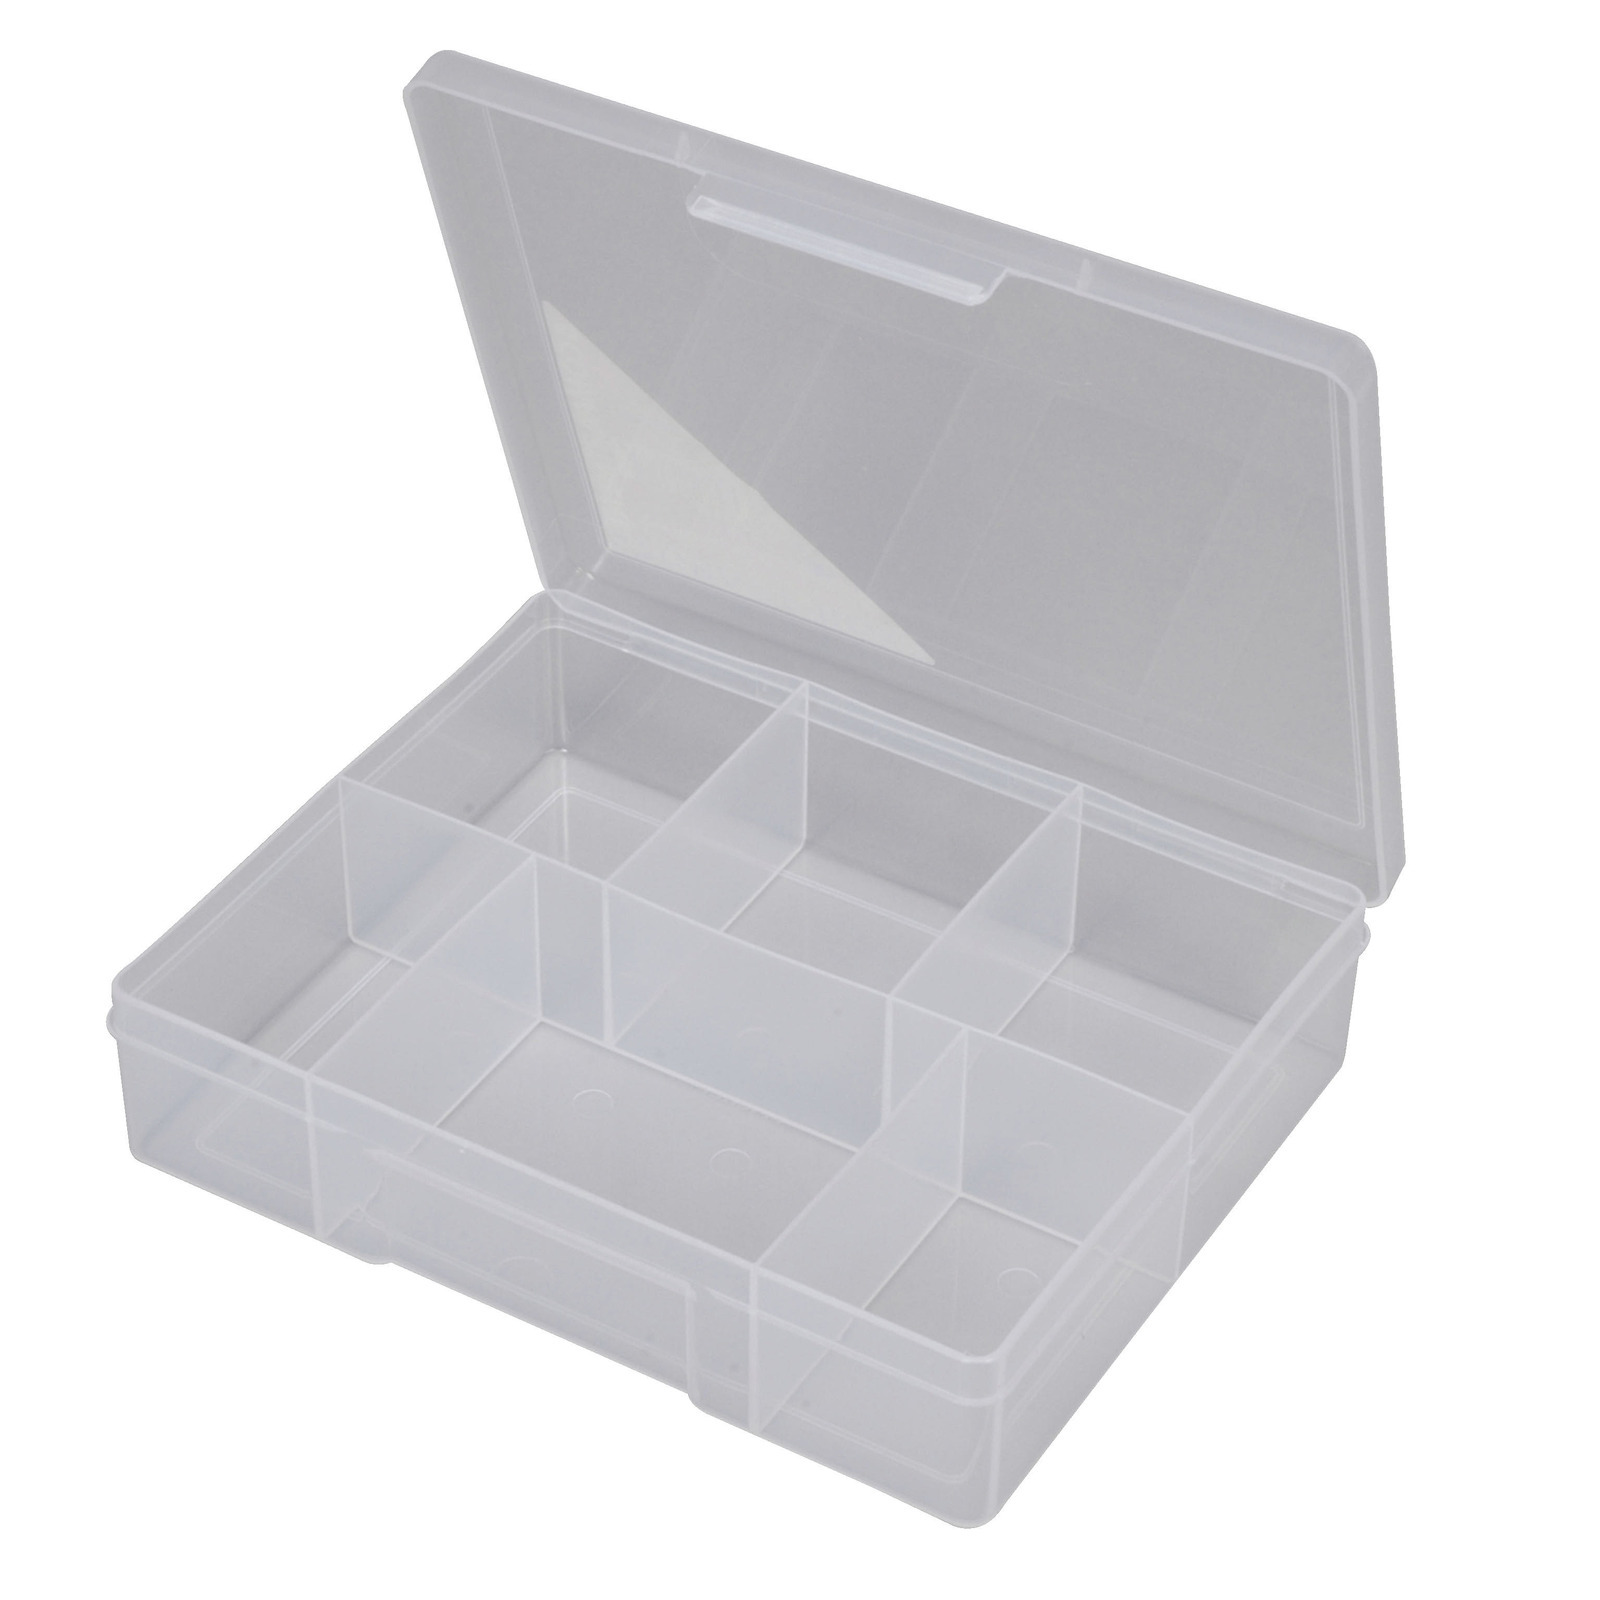 Accessory Boxes - Medium  (6 compartments)